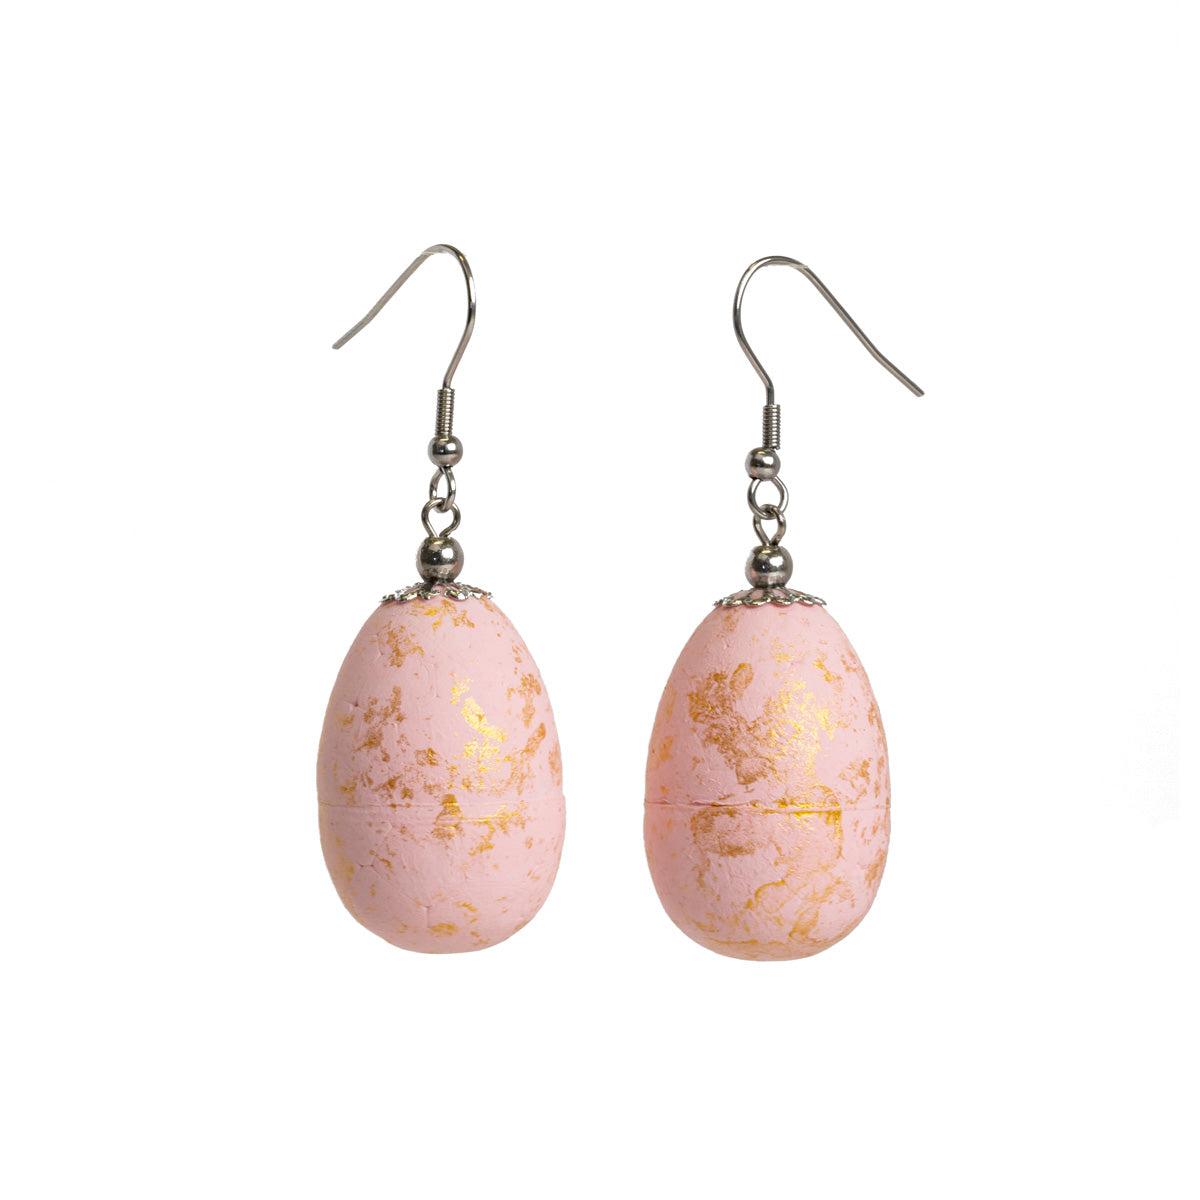 Decorated Easter egg earrings